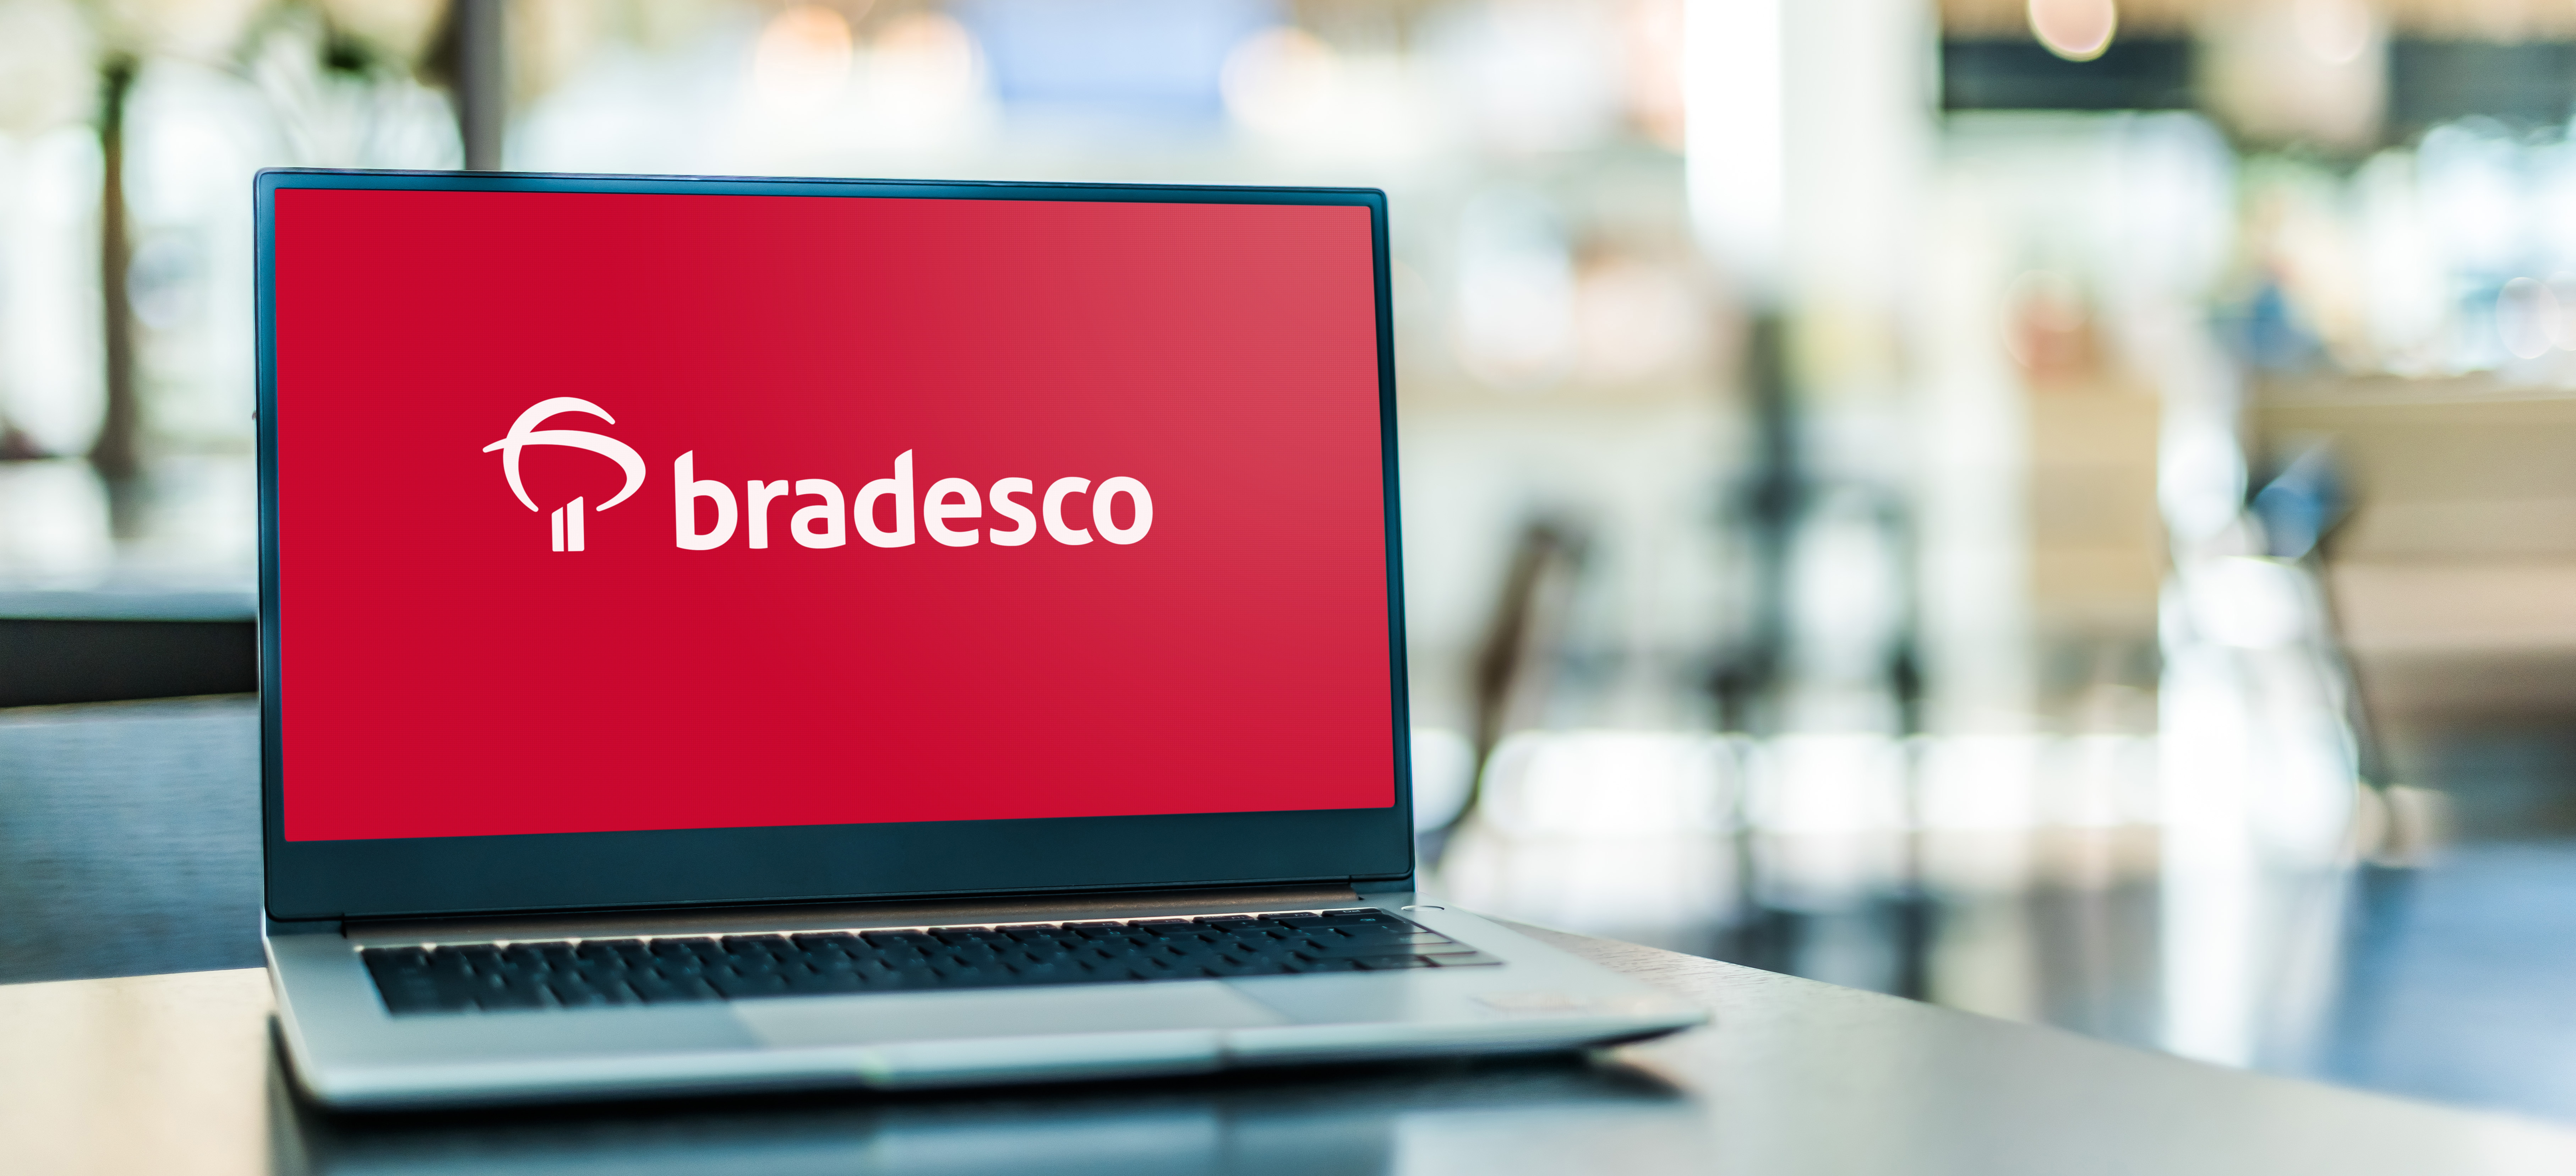 Confira as principais características do cartão Bradesco! Fonte: Adobe Stock